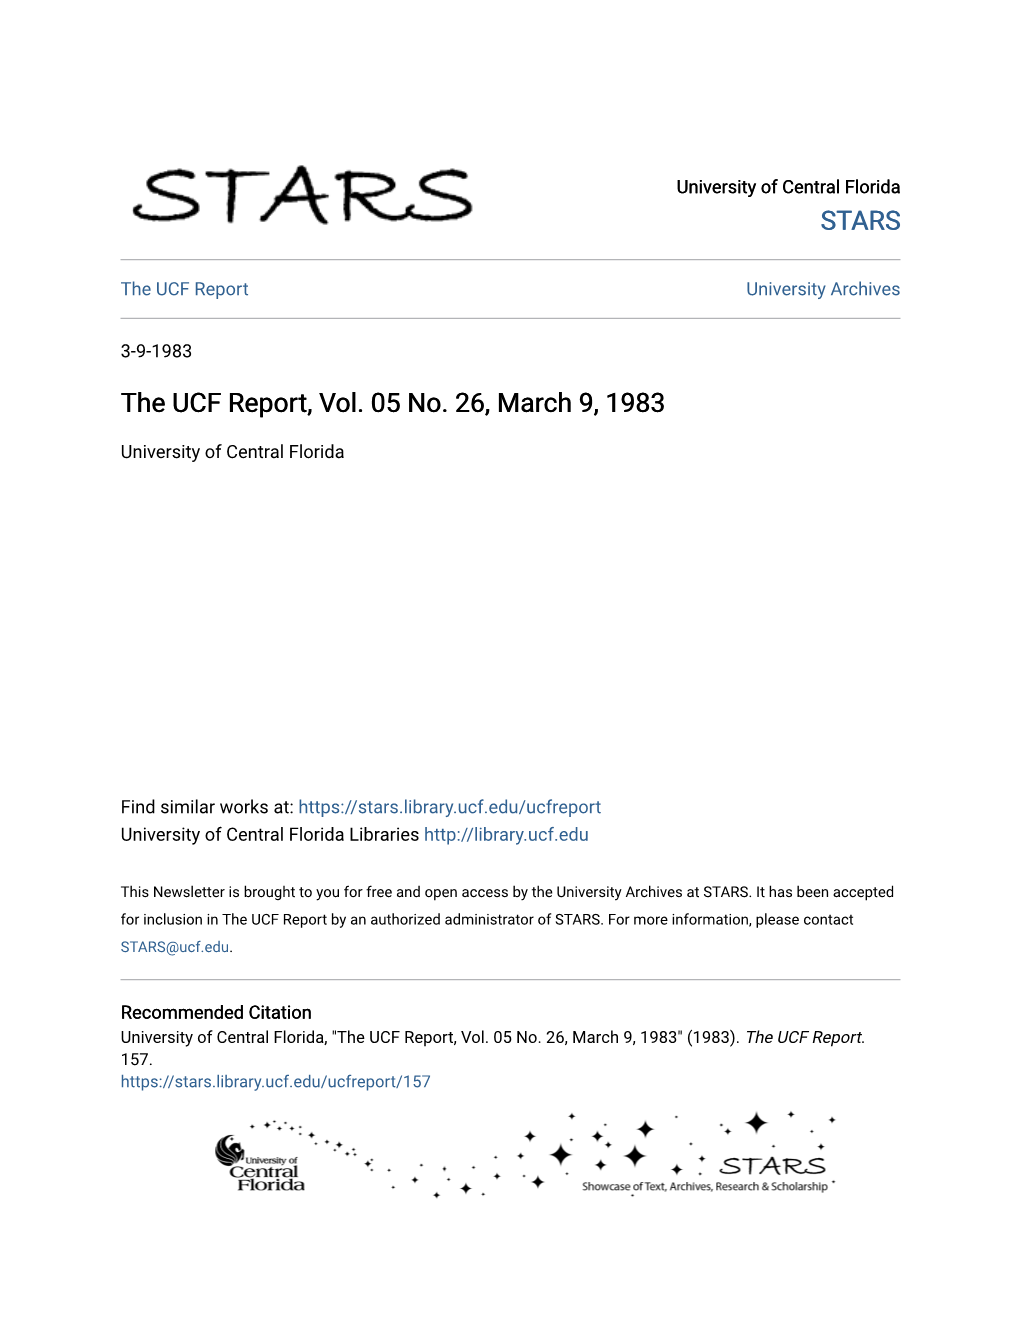 The UCF Report, Vol. 05 No. 26, March 9, 1983